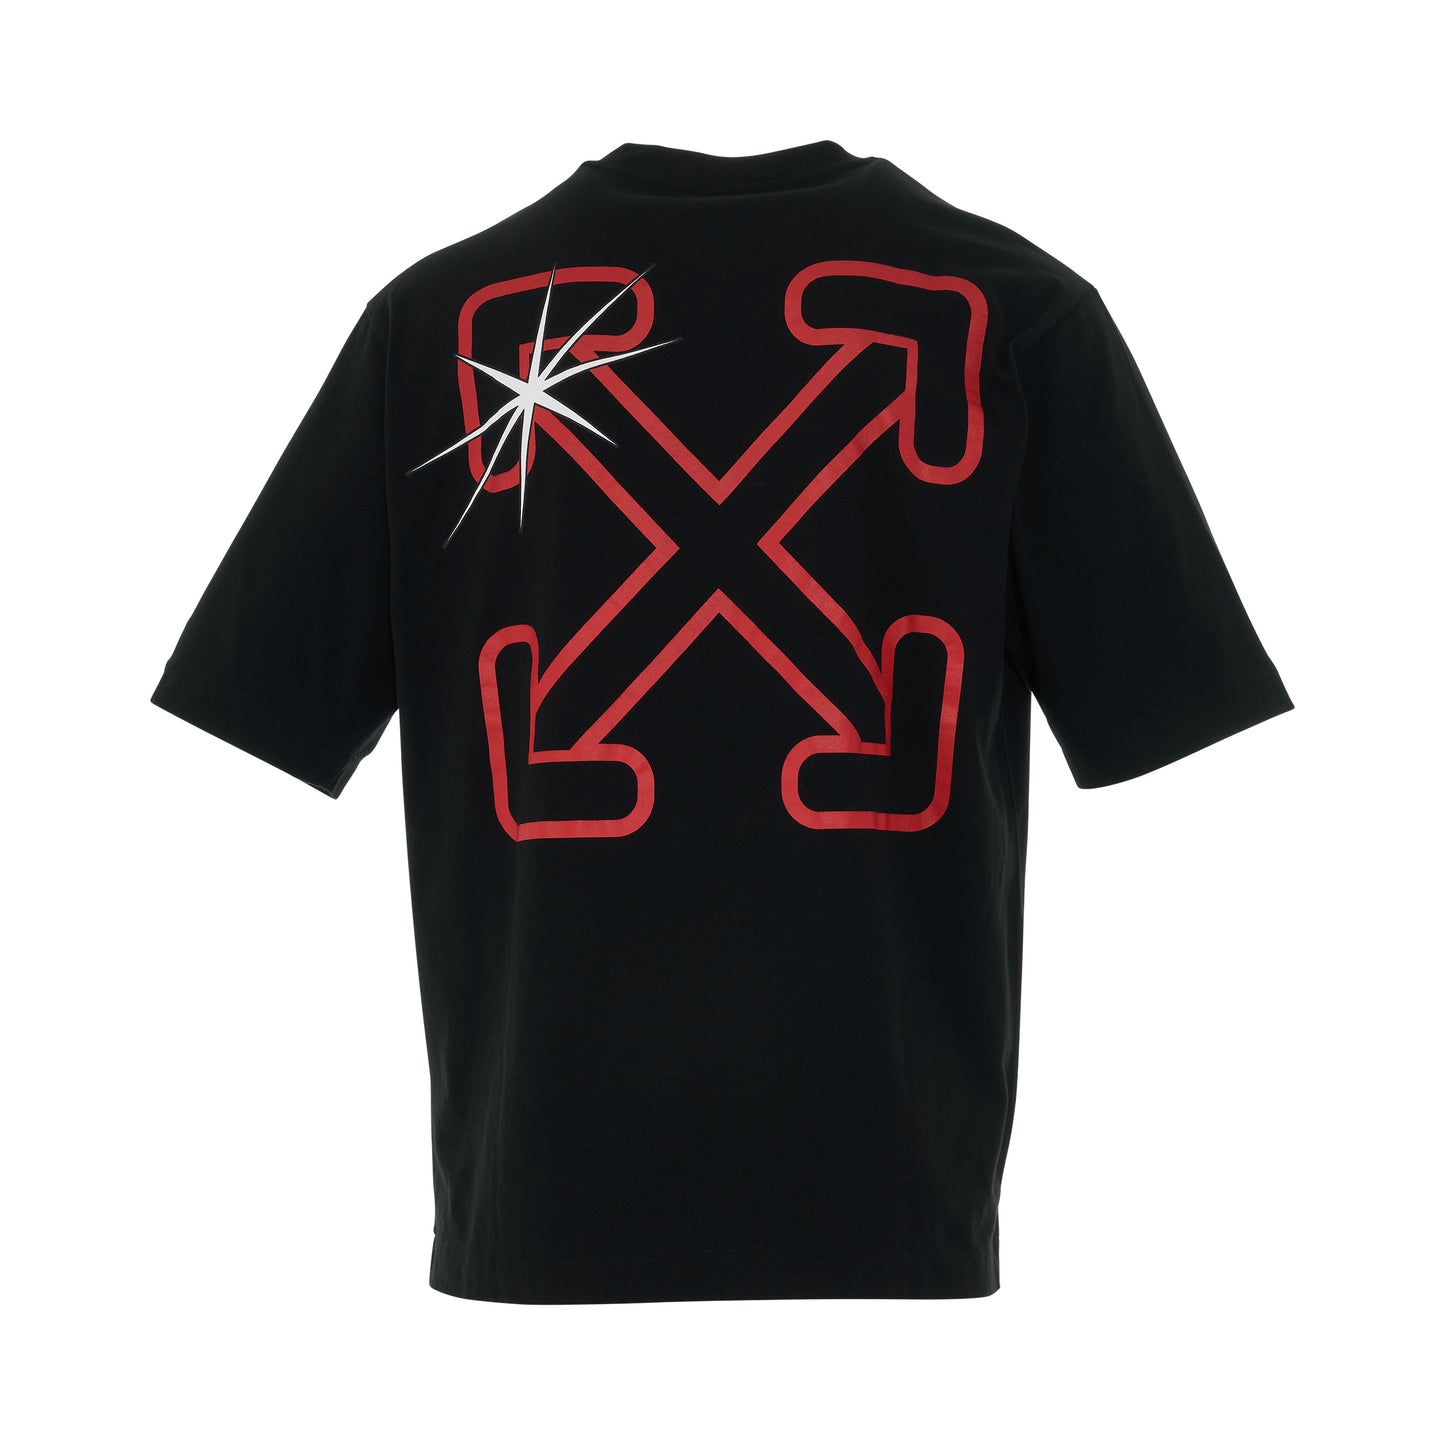 Starrowed Arrow Skate Fit T-Shirt in Black